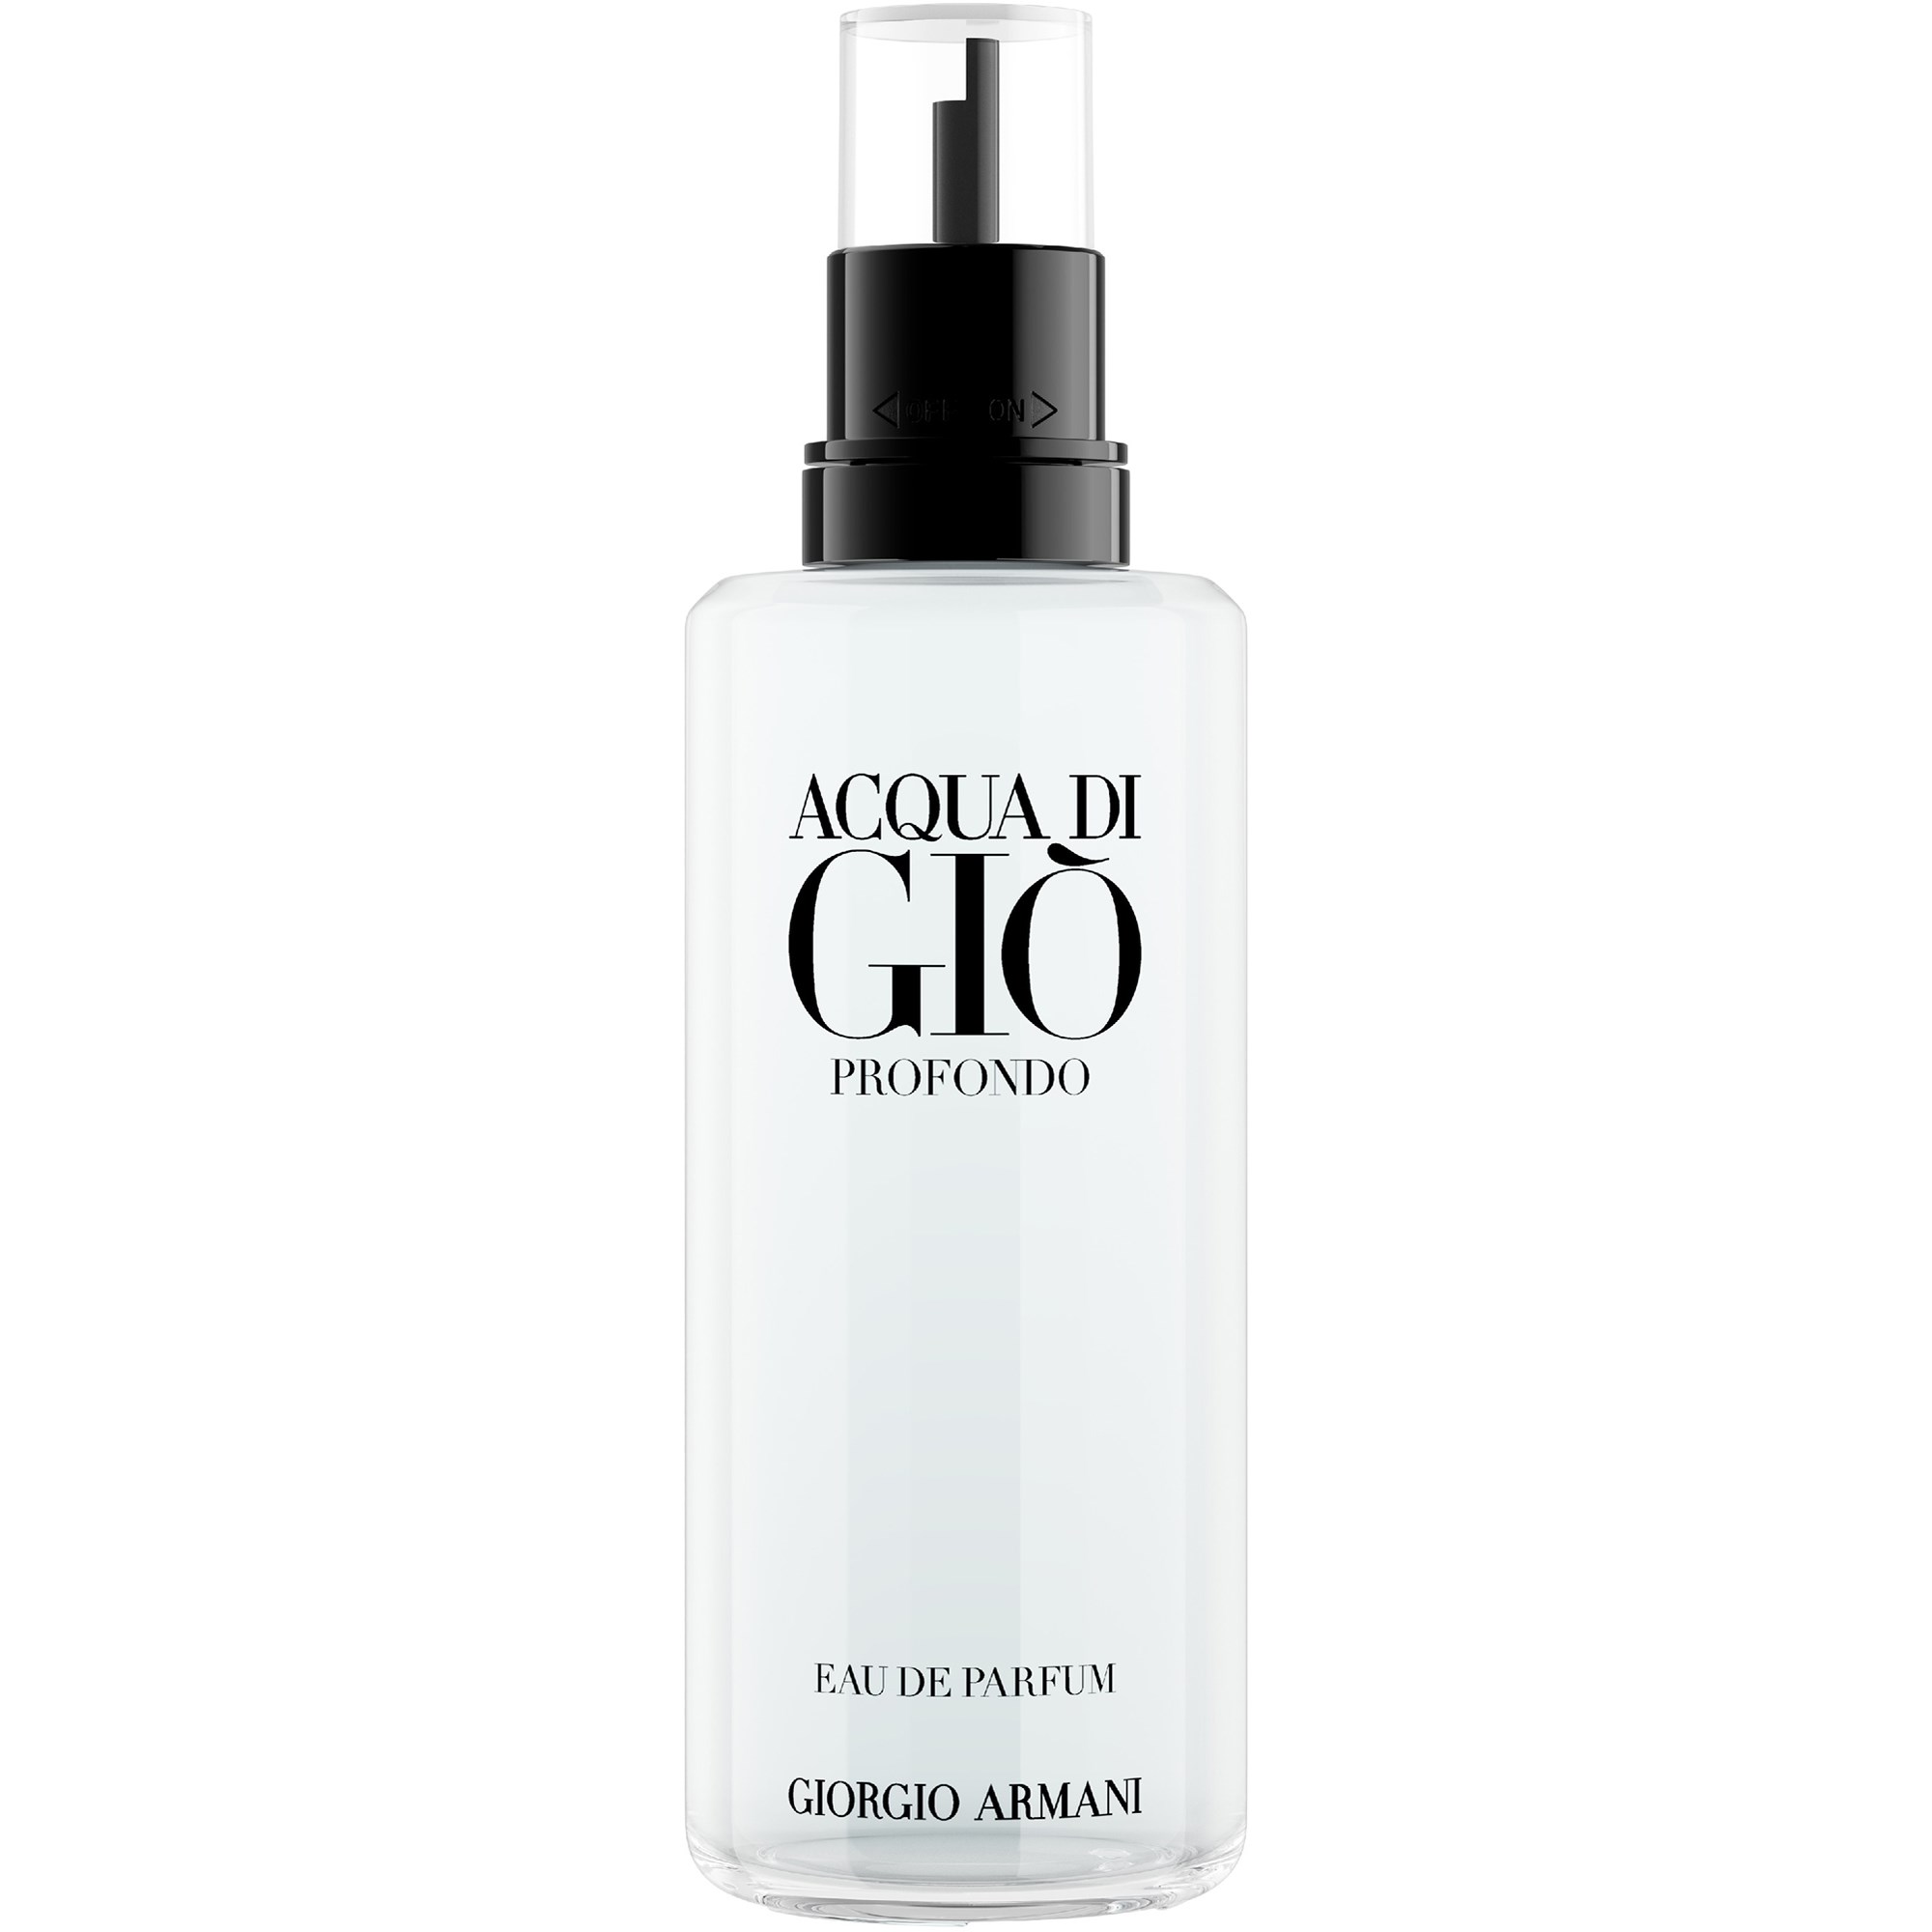 Фото - Чоловічі парфуми Armani Giorgio  Acqua di Giò Profondo Eau de Parfum Refill 150 ml 